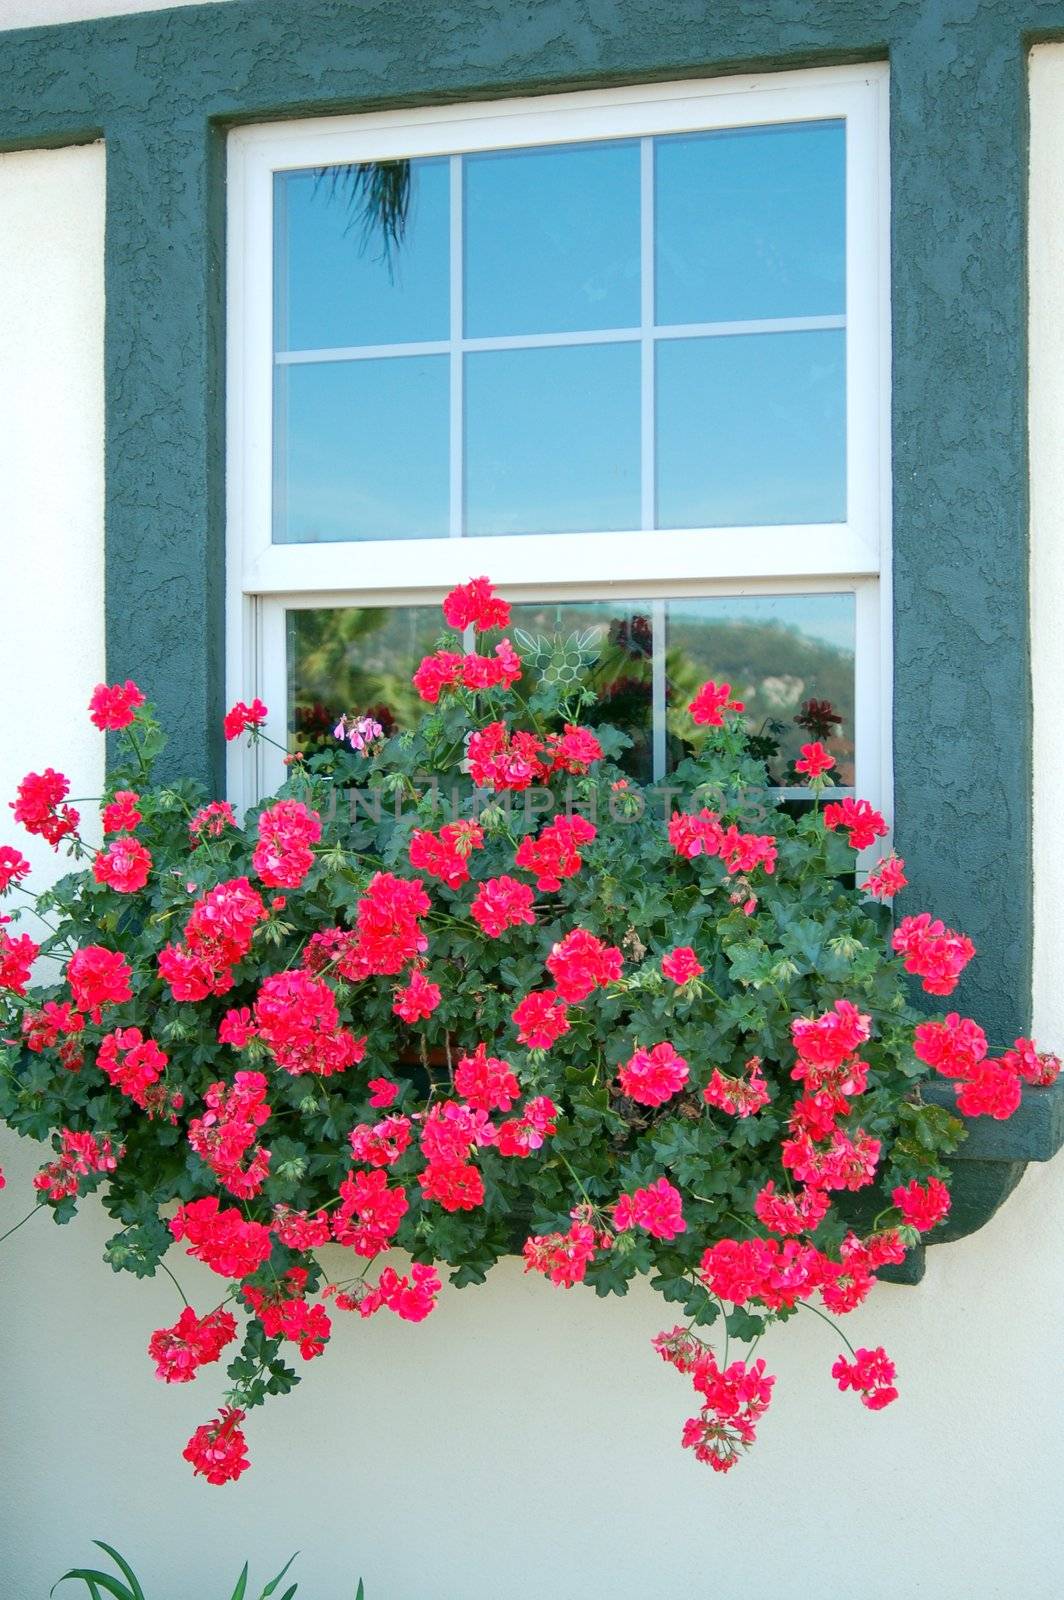 Red Flowers on Window by nikonite